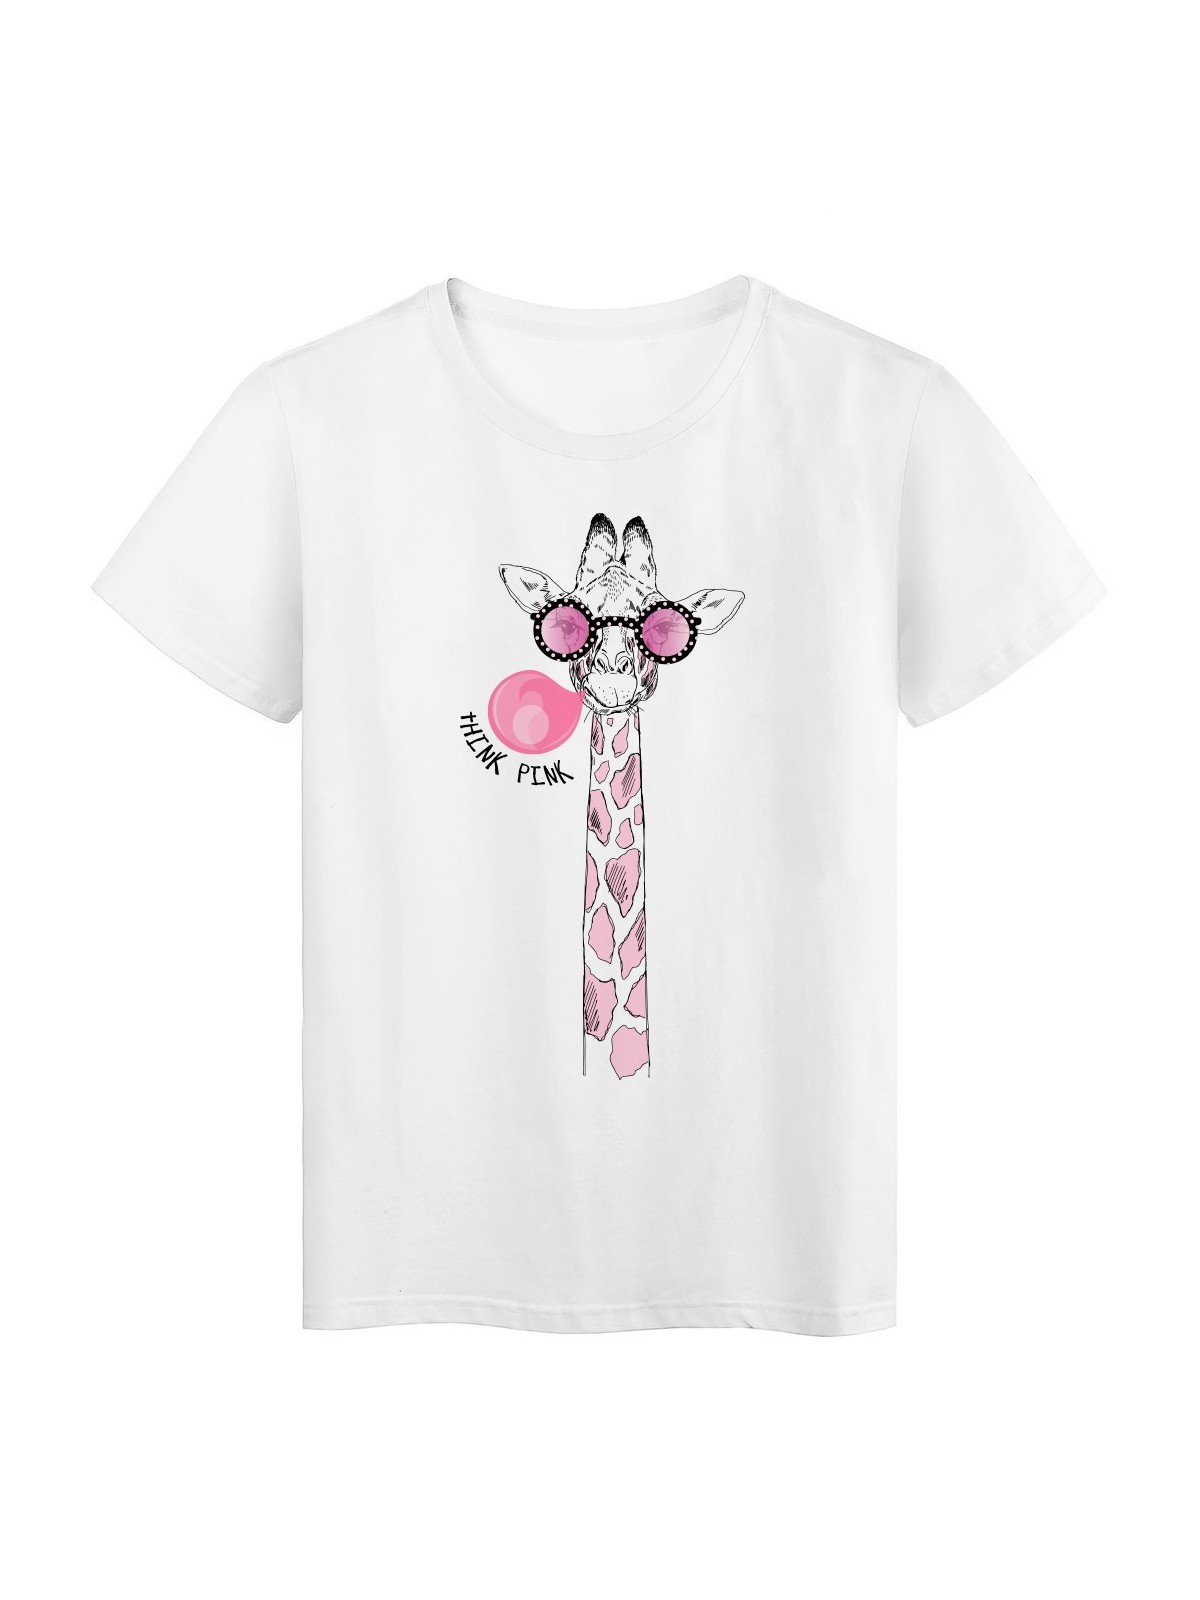 T-Shirt blanc design Girafe rose Ã  lunettes rÃ©f Tee shirt 2145